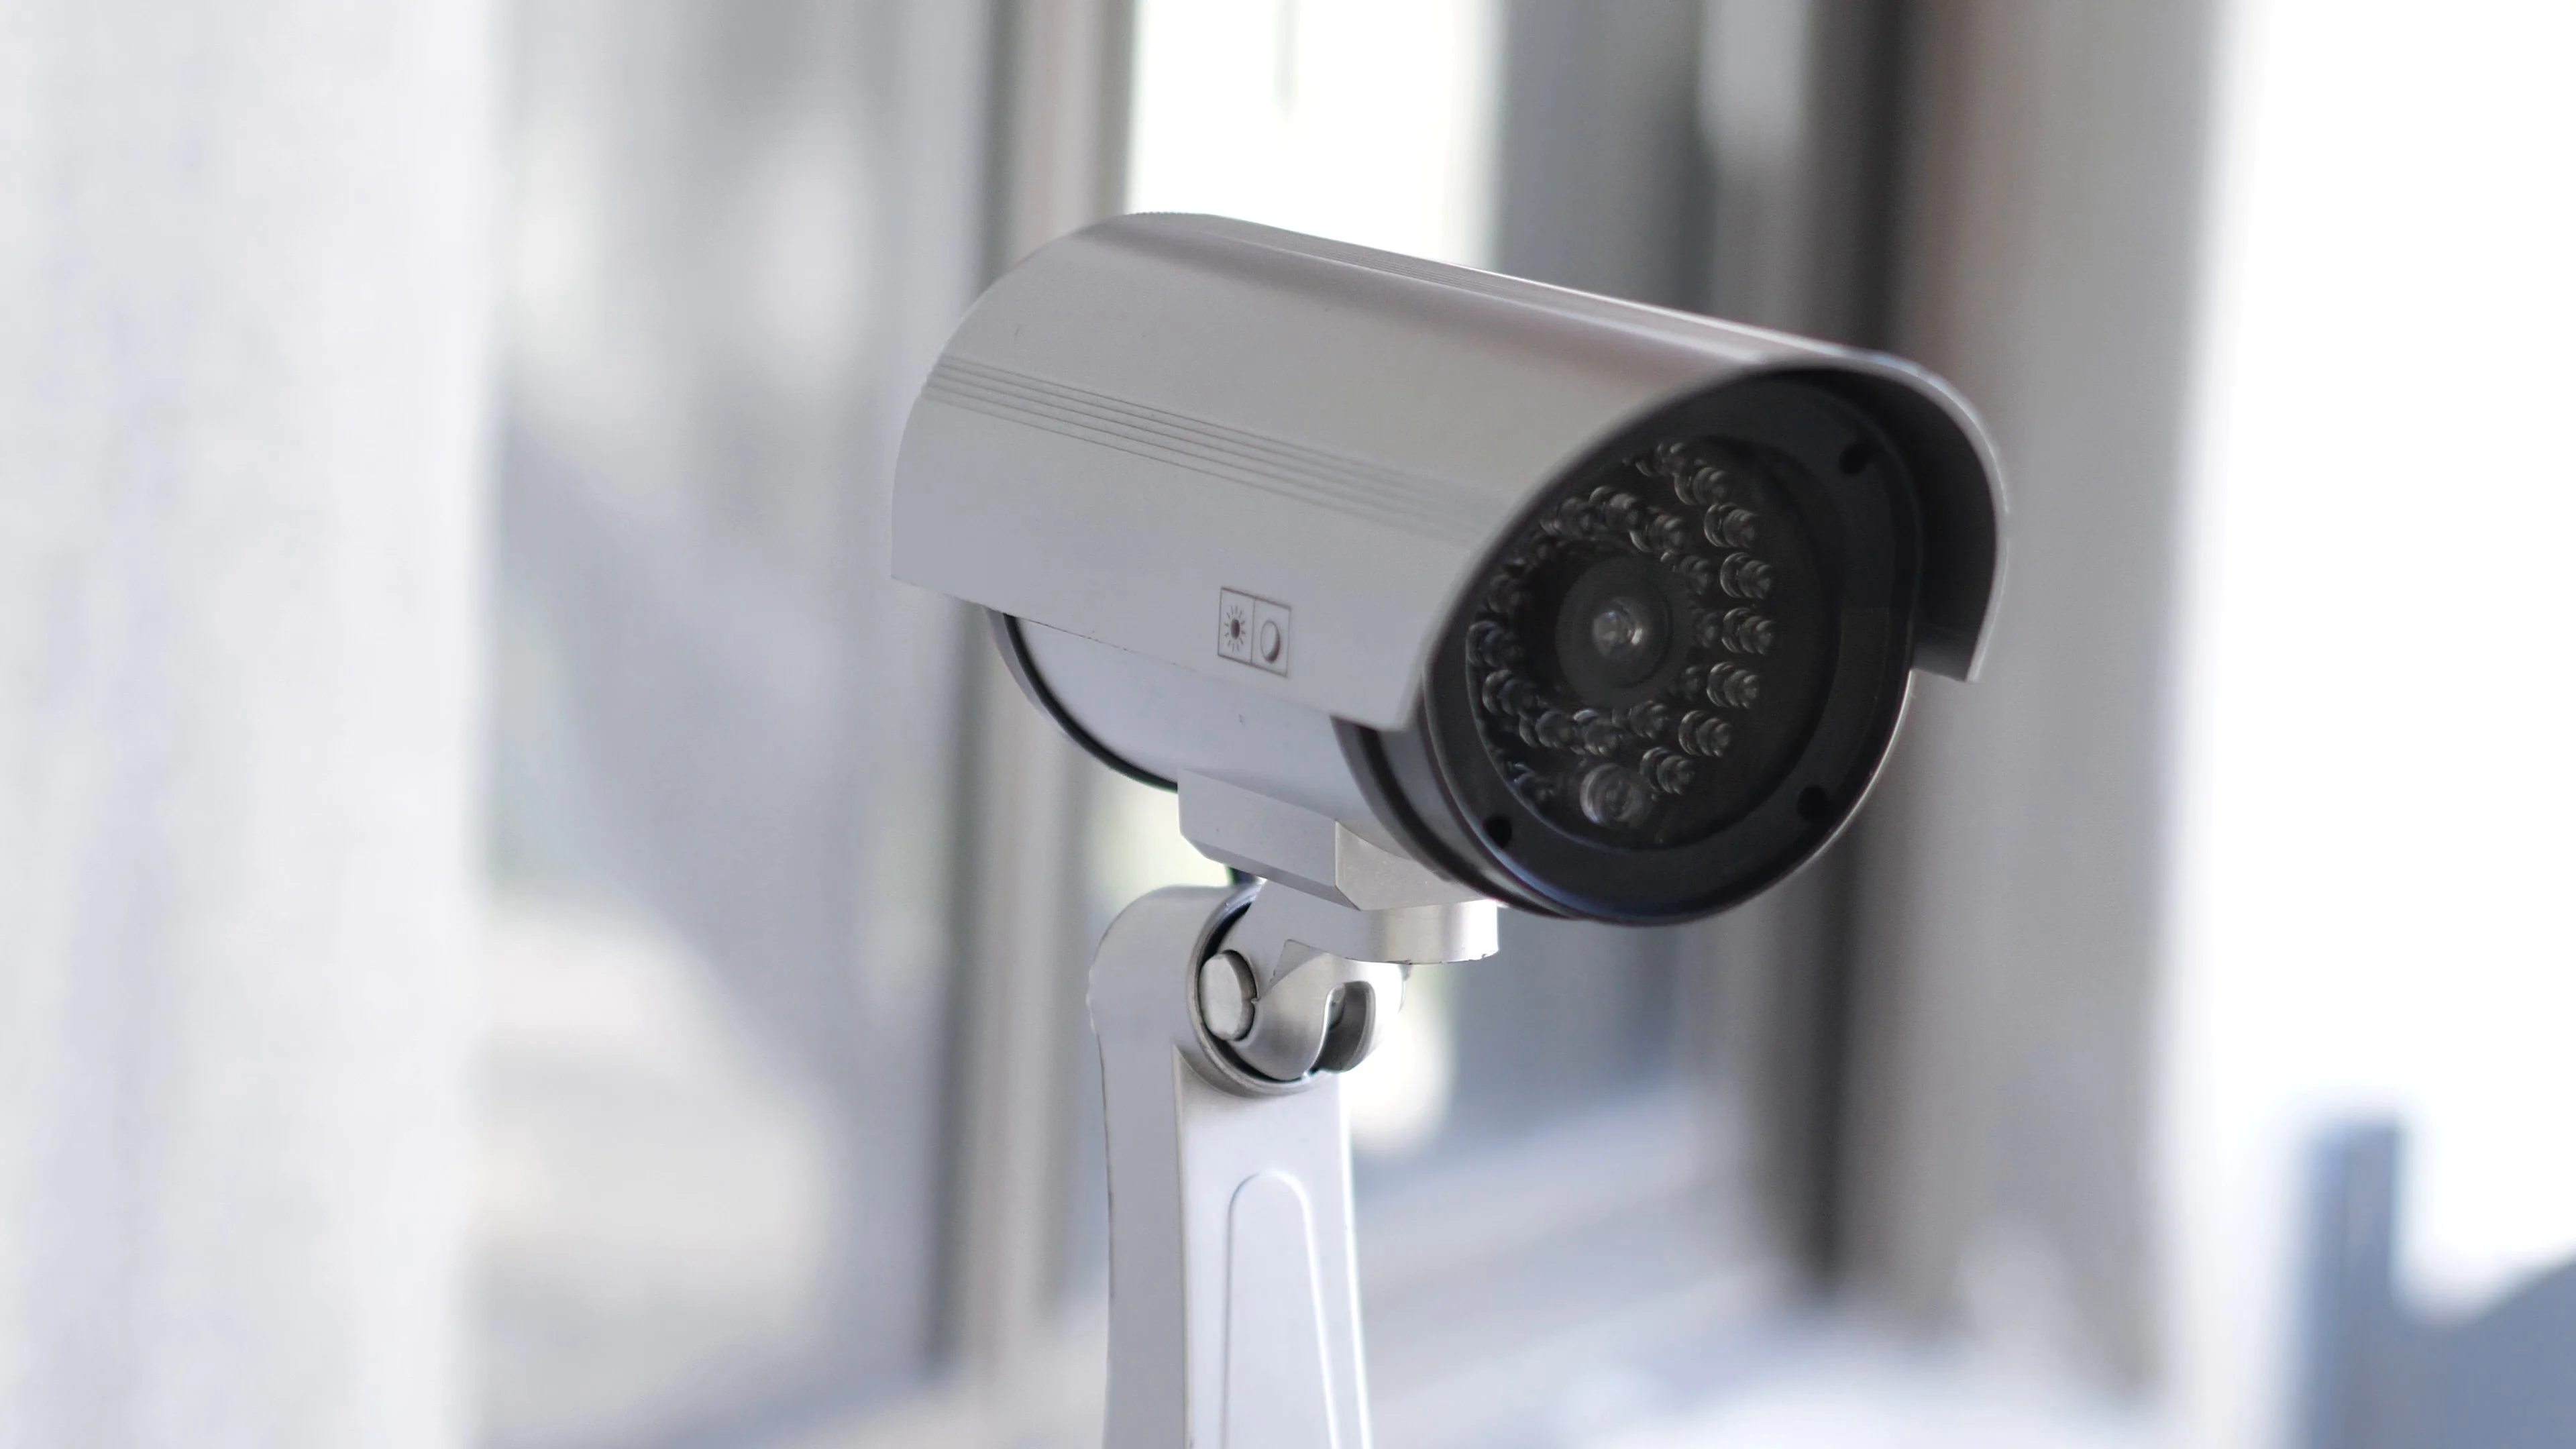 Surveillance Security Camera | Stock Video | Pond5